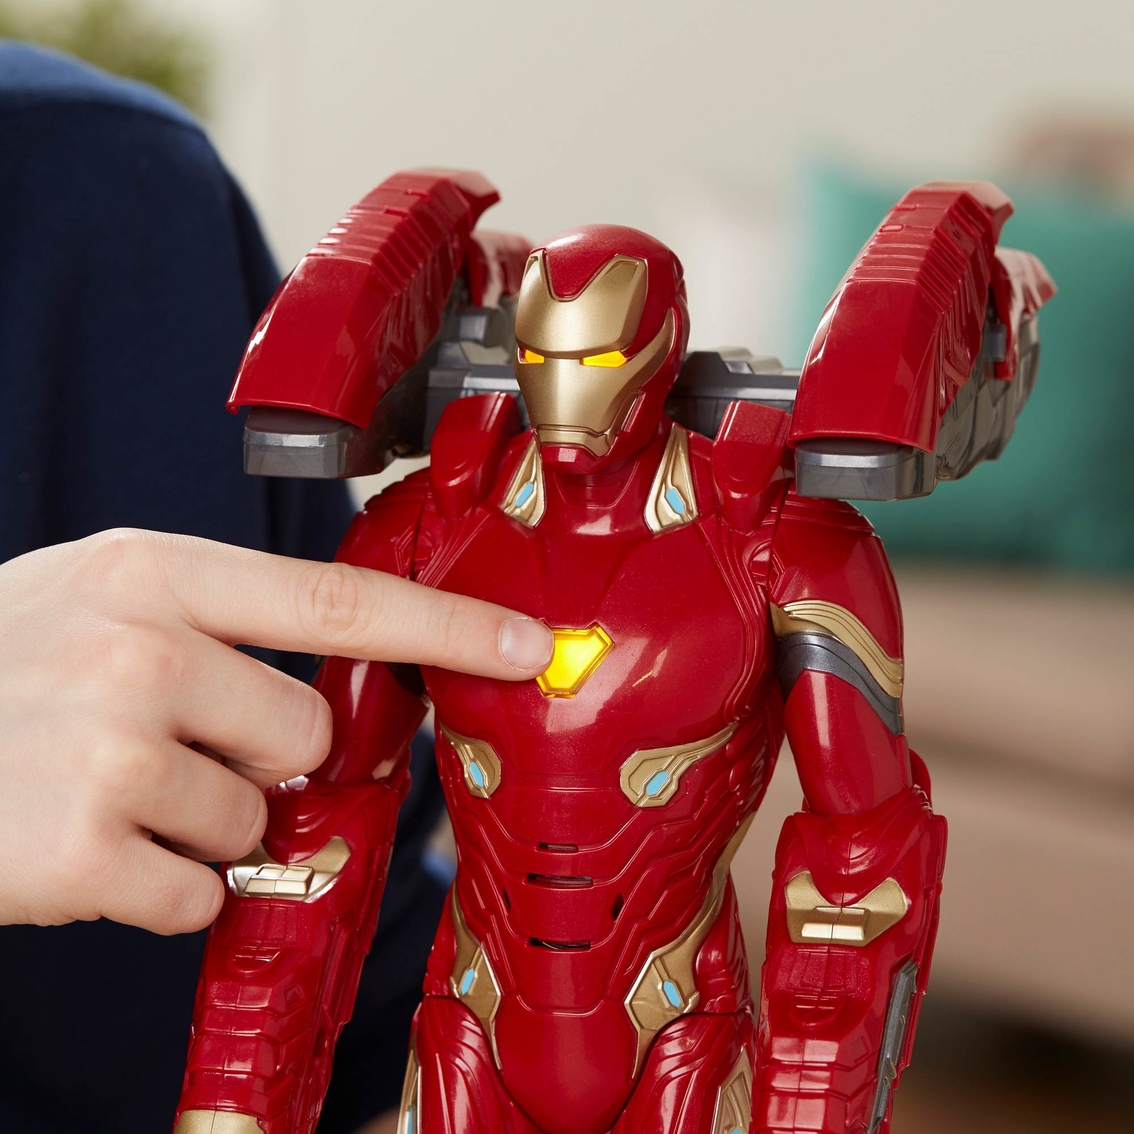 Marvel Avengers Mission Tech Iron Man Figure - Image 4 of 8